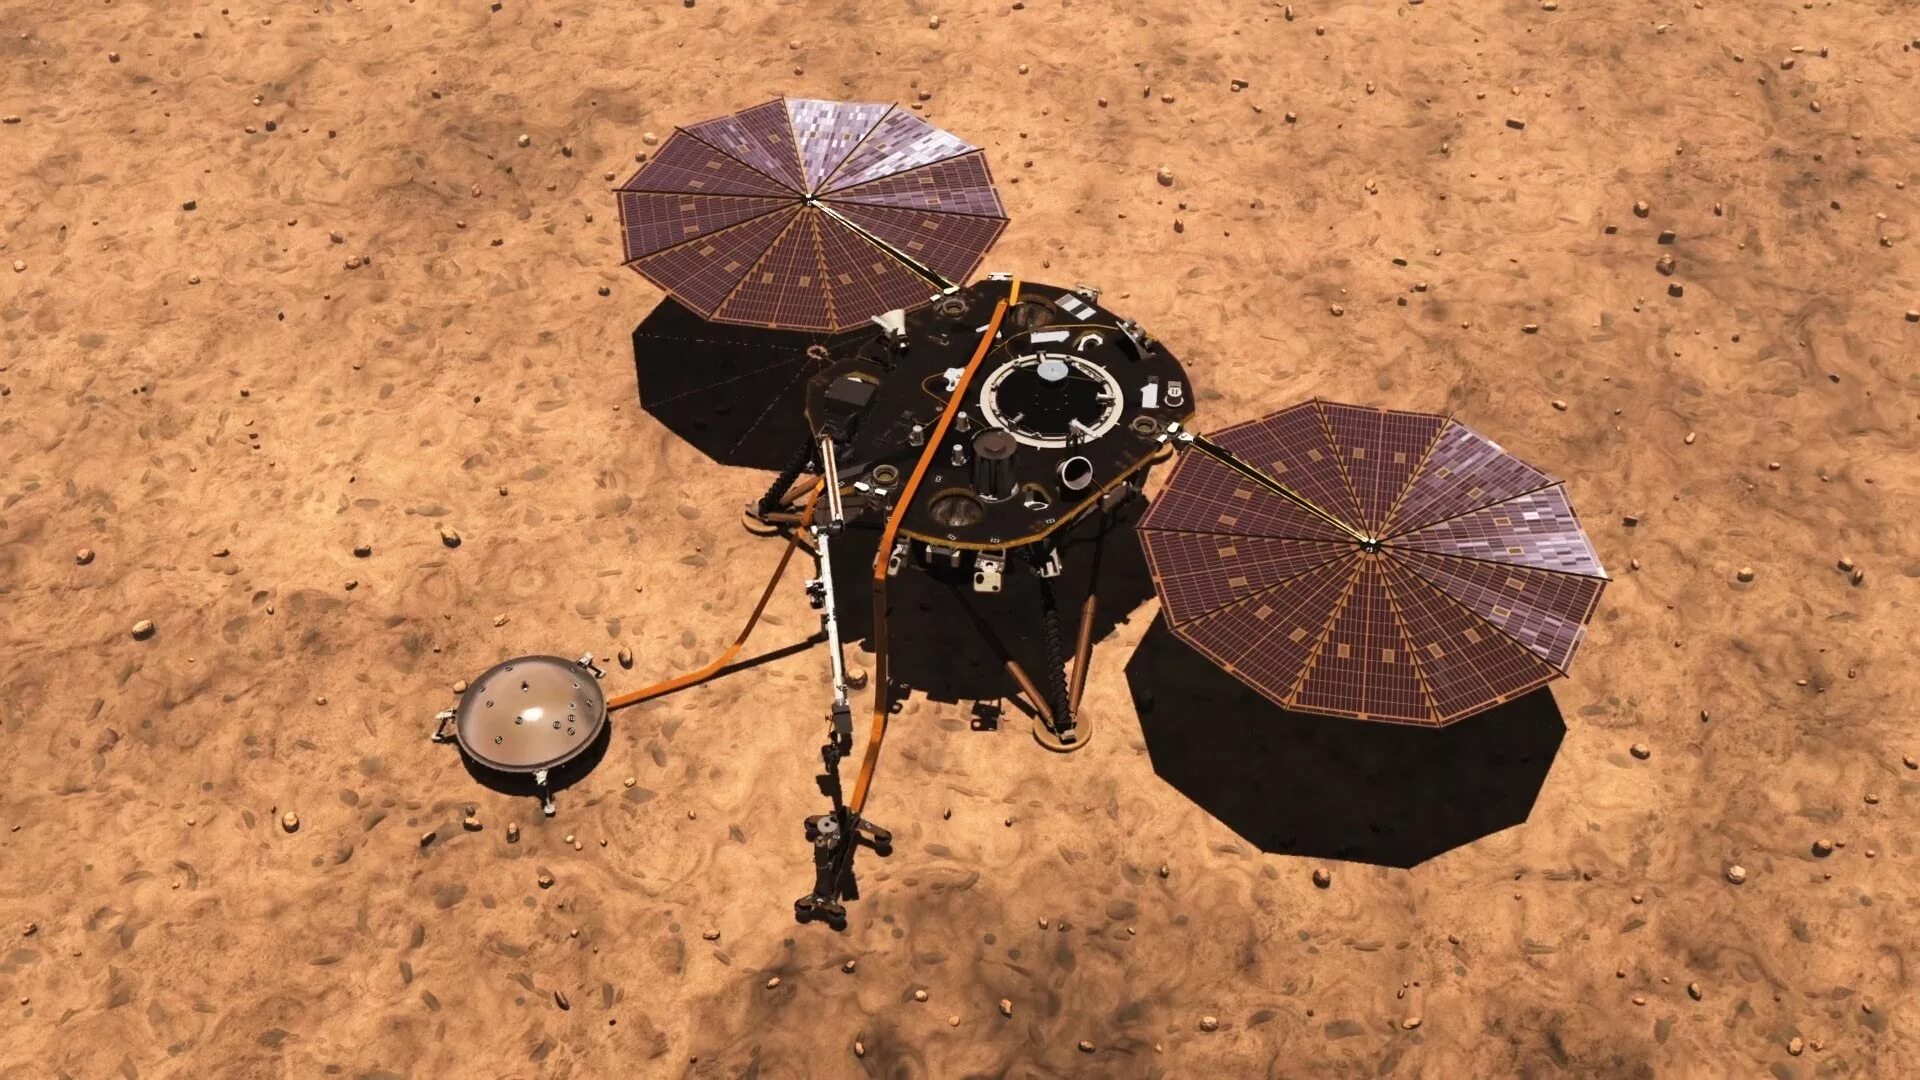 Марсианский зонд. Марсоход космический аппарат Insight. Инсайт Марс. Аппарат Феникс Марс. Insight аппарат на Марсе.